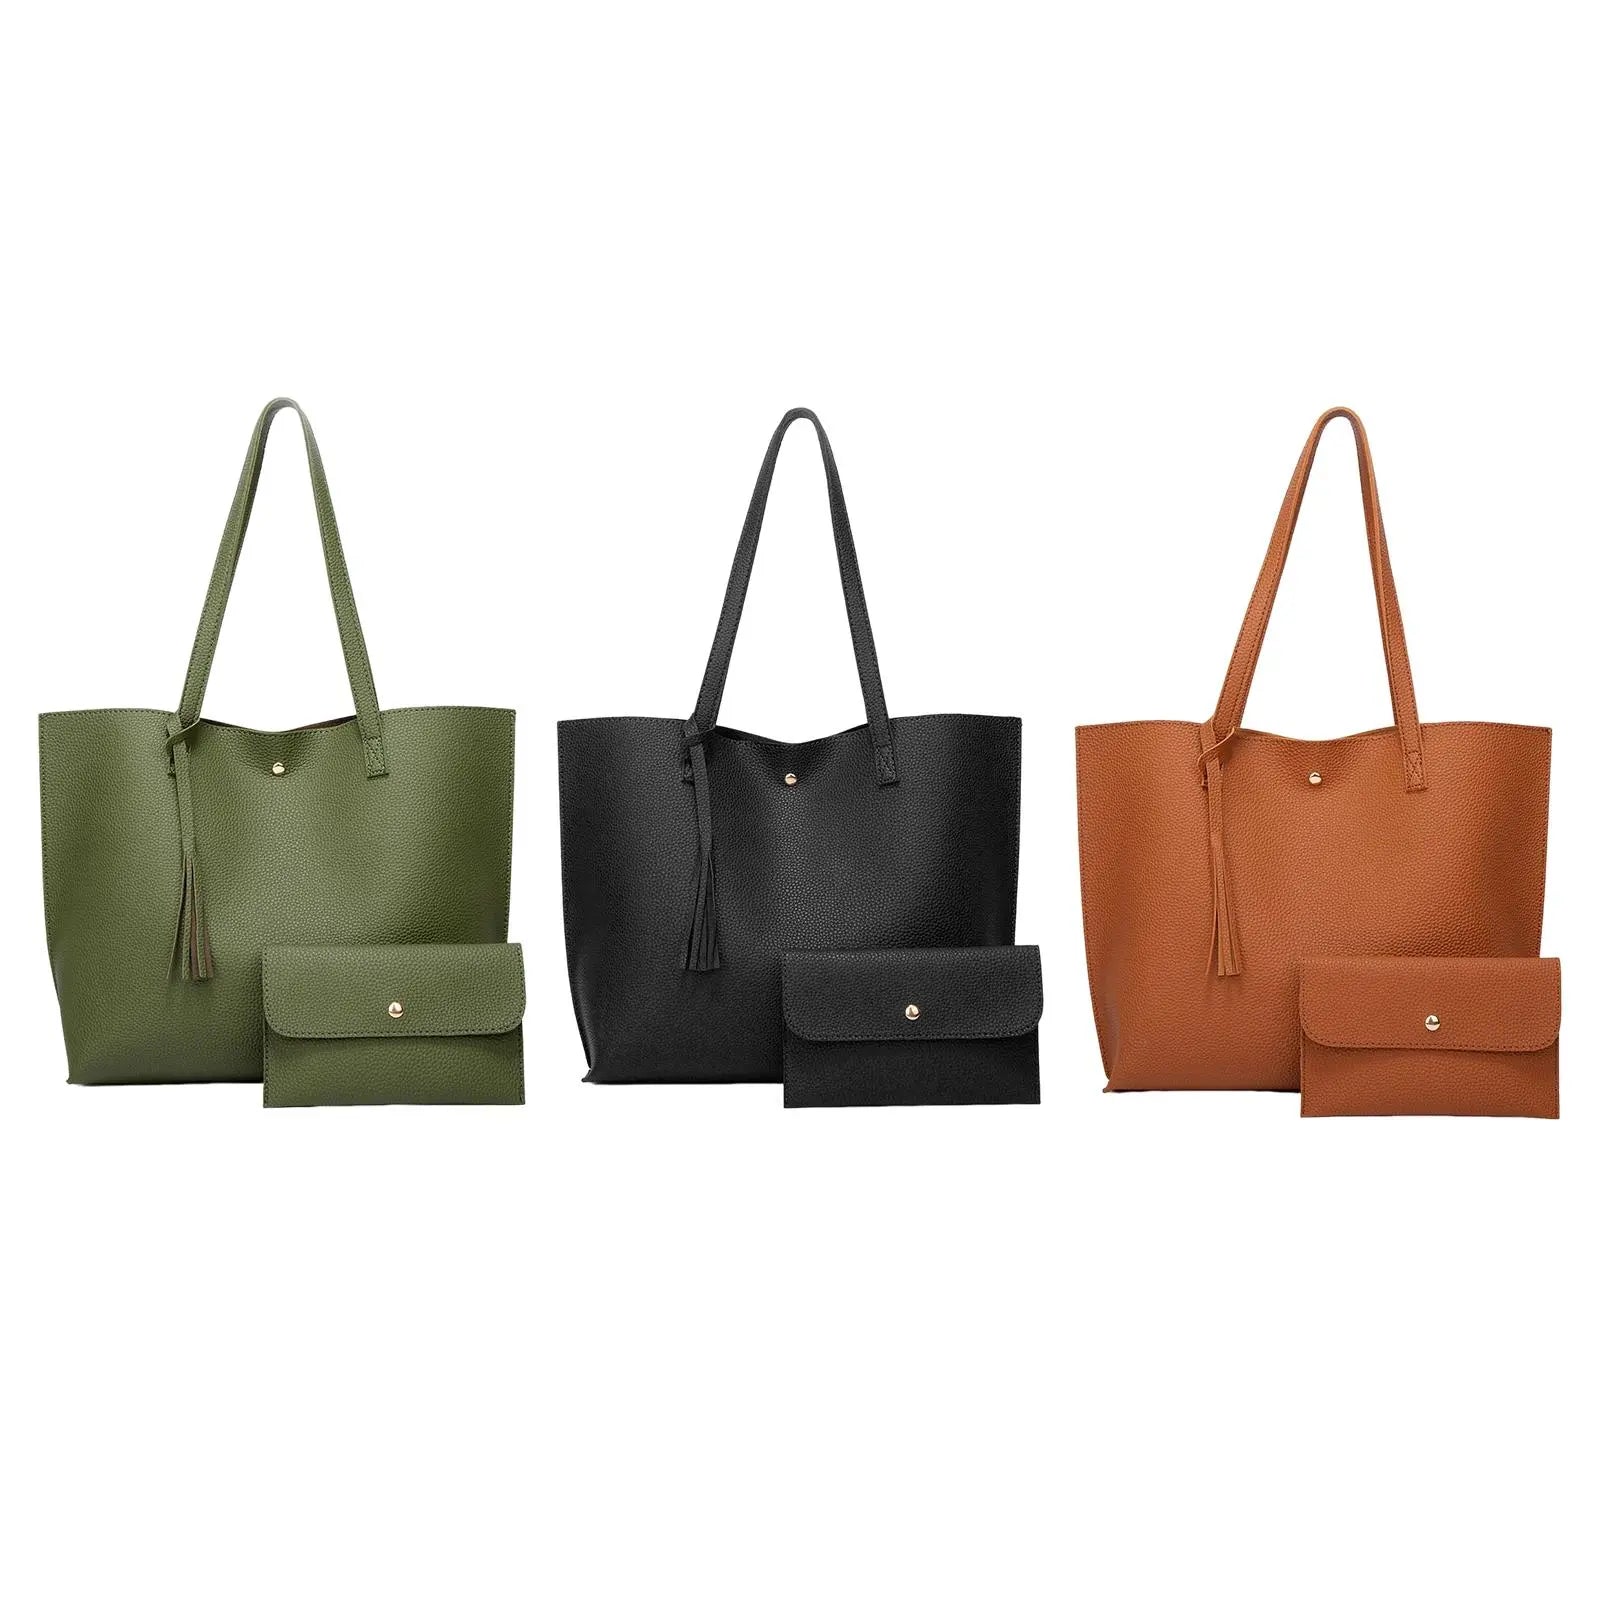 Handbags for Women, Ladies Handbag Tote Bag Soft PU Leather Large Capacity Womens Top Handle Shoulder Bag